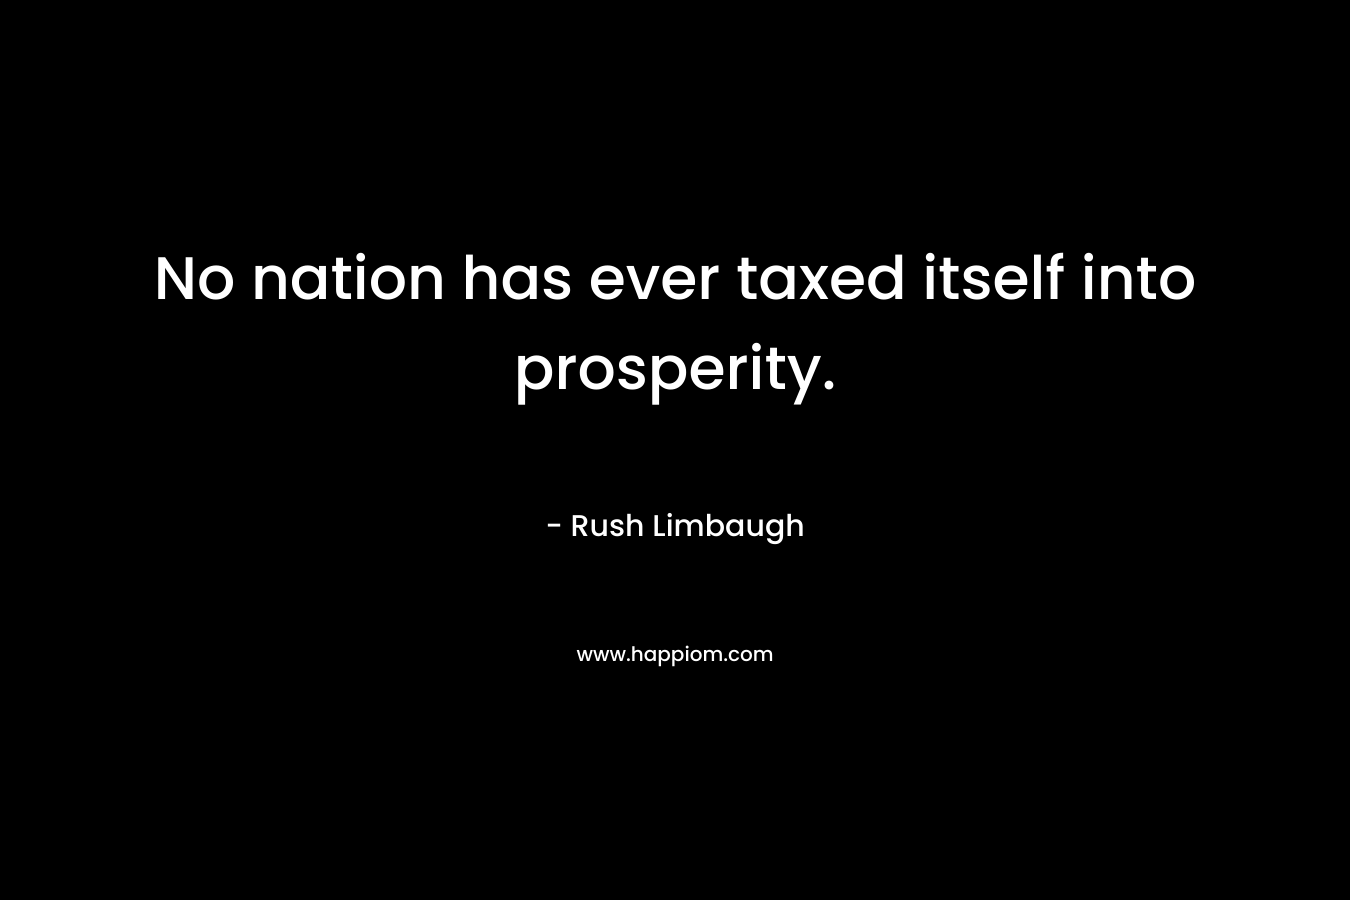 No nation has ever taxed itself into prosperity.